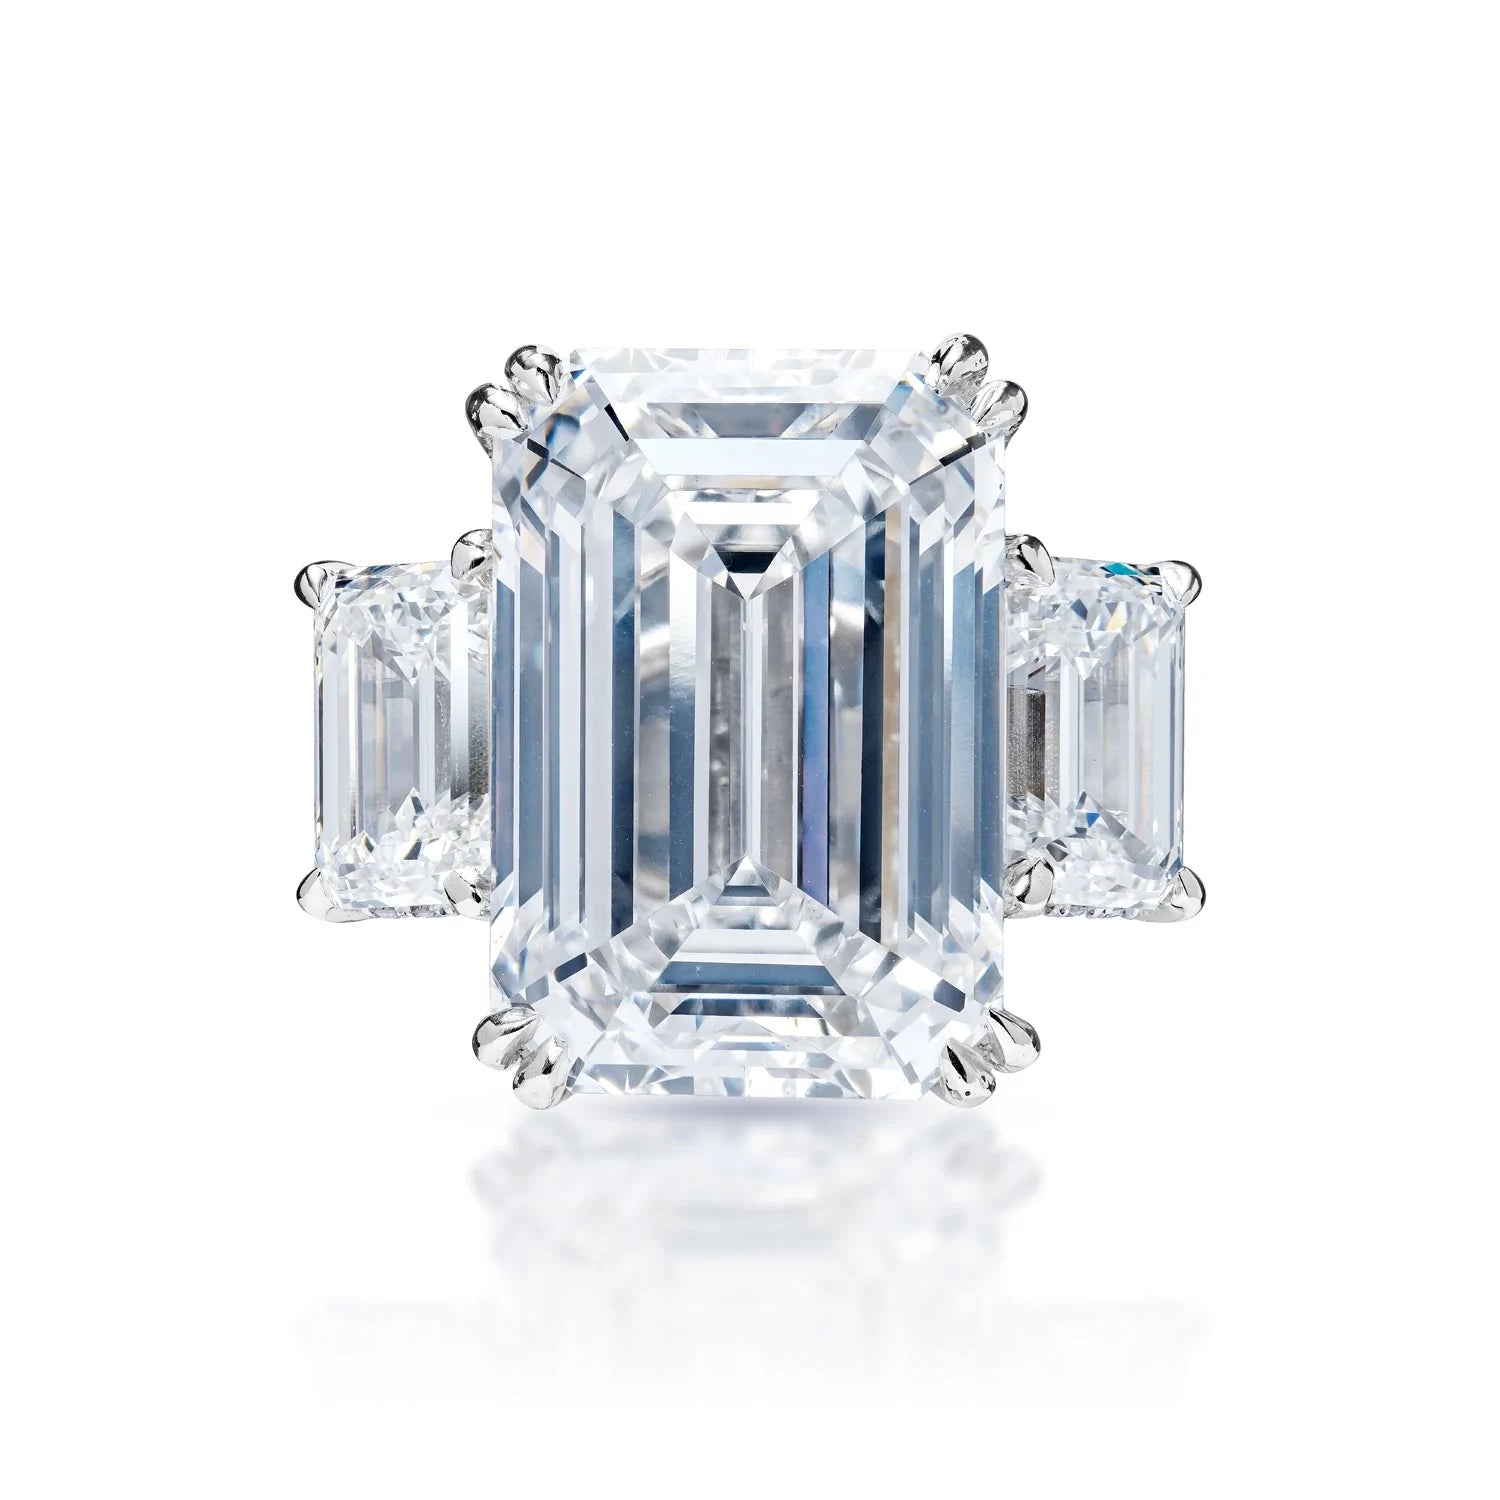 Lianna 25 Carat F VVS2 Emerald Cut Lab Grown Diamond Engagement Ring Three Stone in Platinum Front View